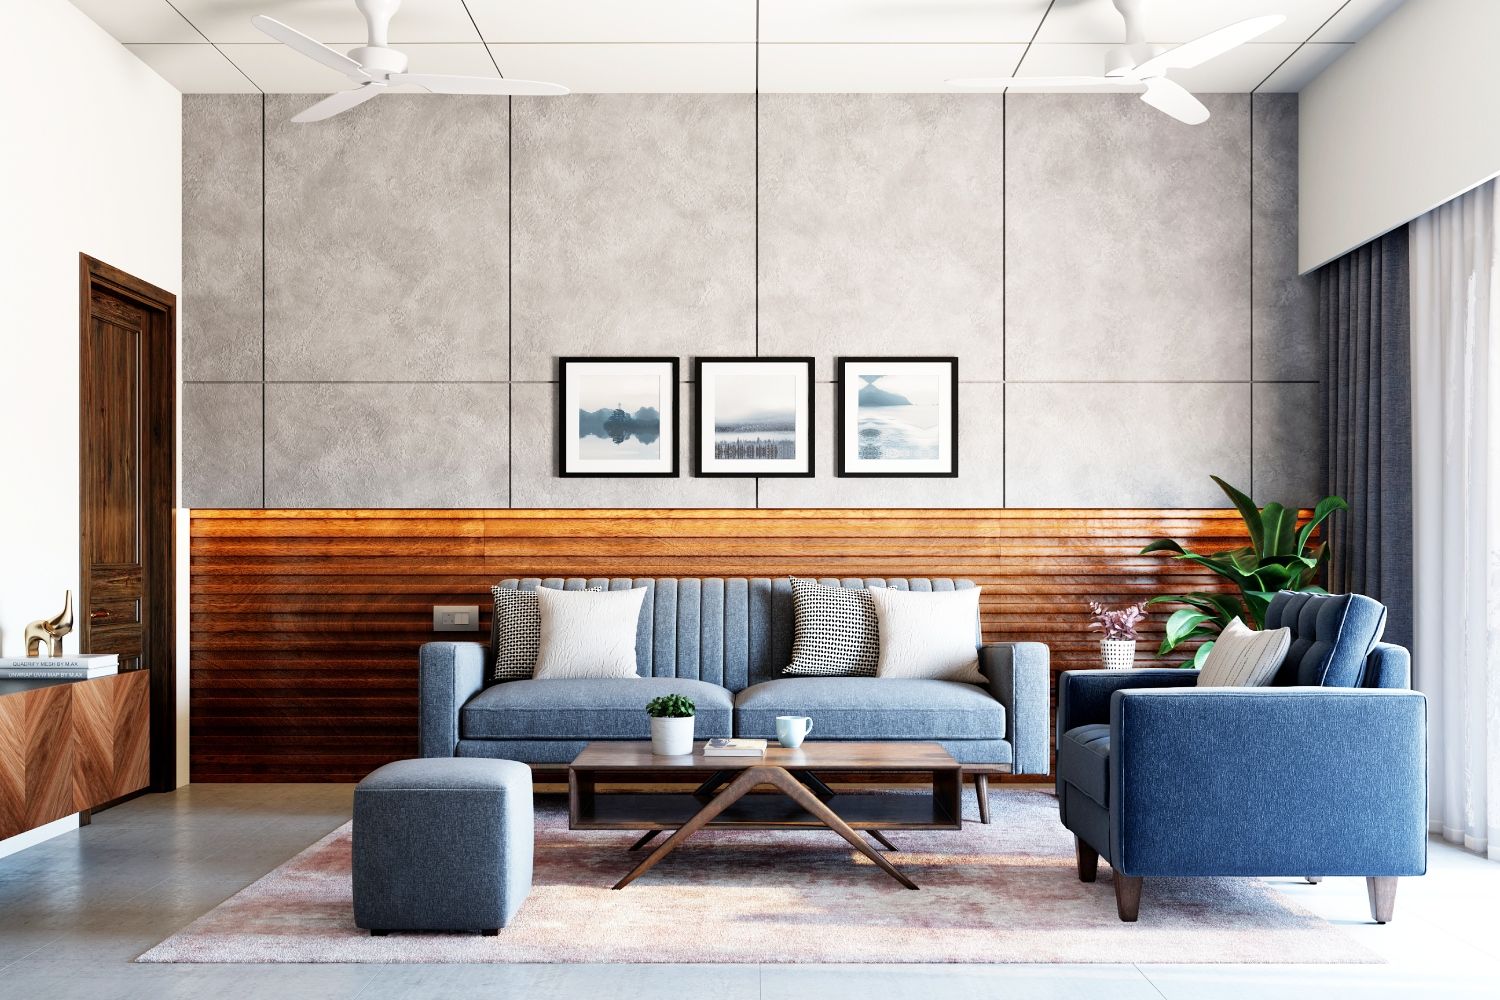 100+ Living Room Wall Decor Design Ideas For Your Home Interiors - Livspace